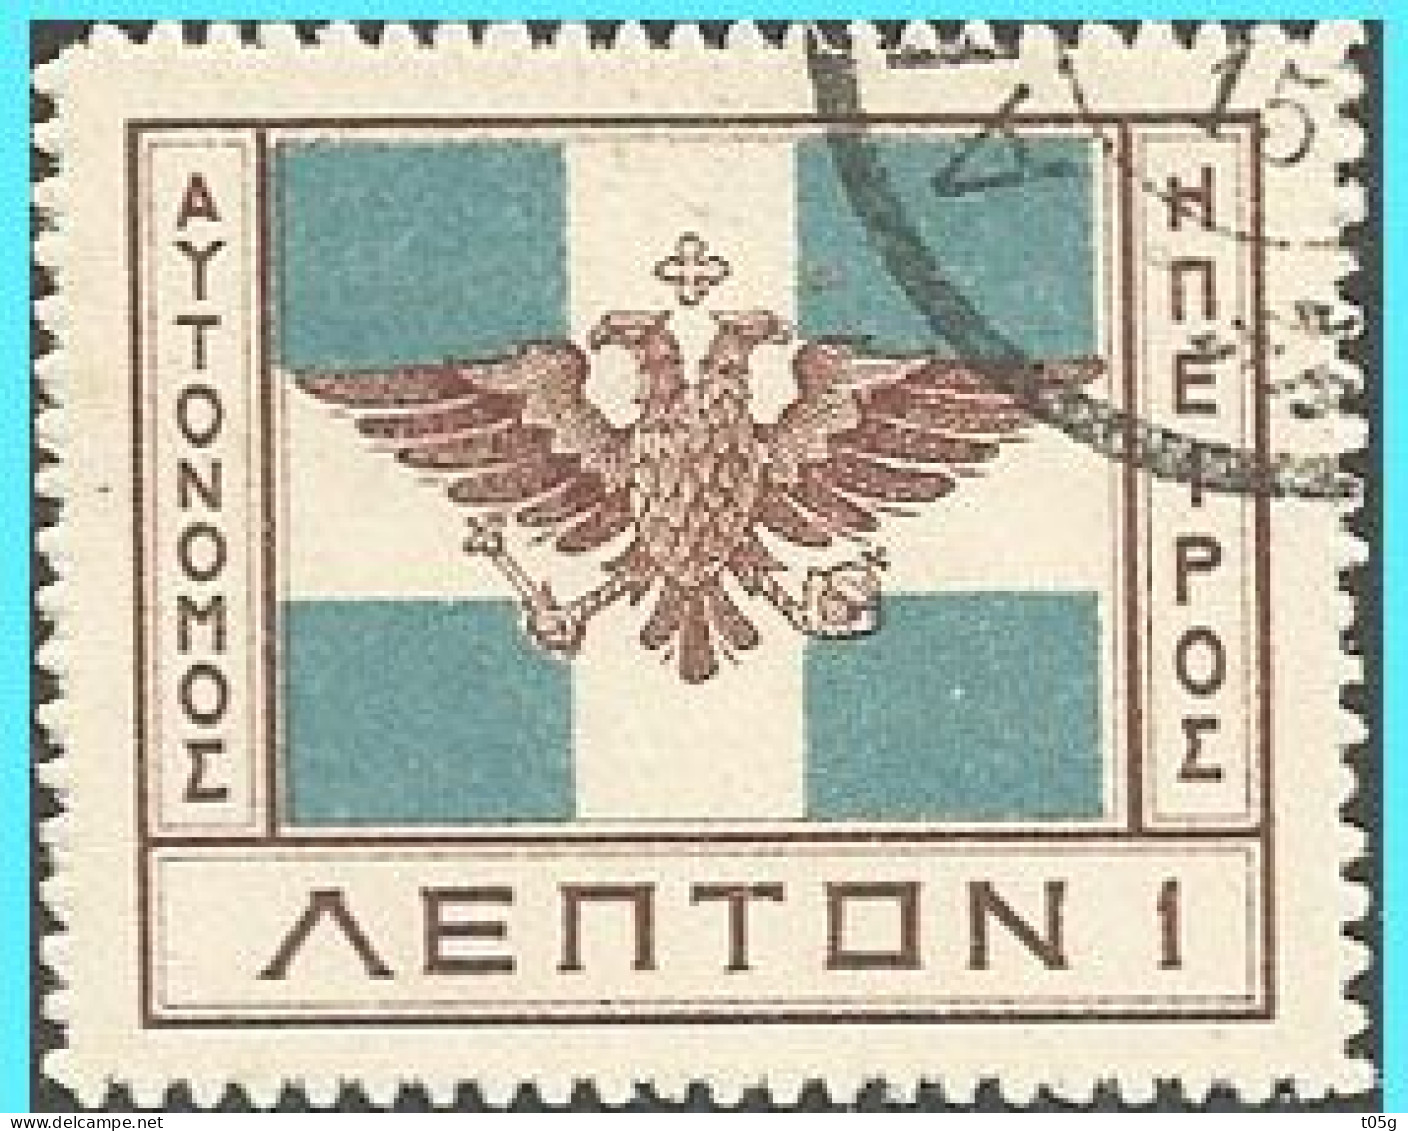 GREECE- GRECE- HELLAS -ALBANIA-EPIRUS- 1914: Flag 1 ΛΕΠΤΟΝ Flag From. Set Used - Epirus & Albanie